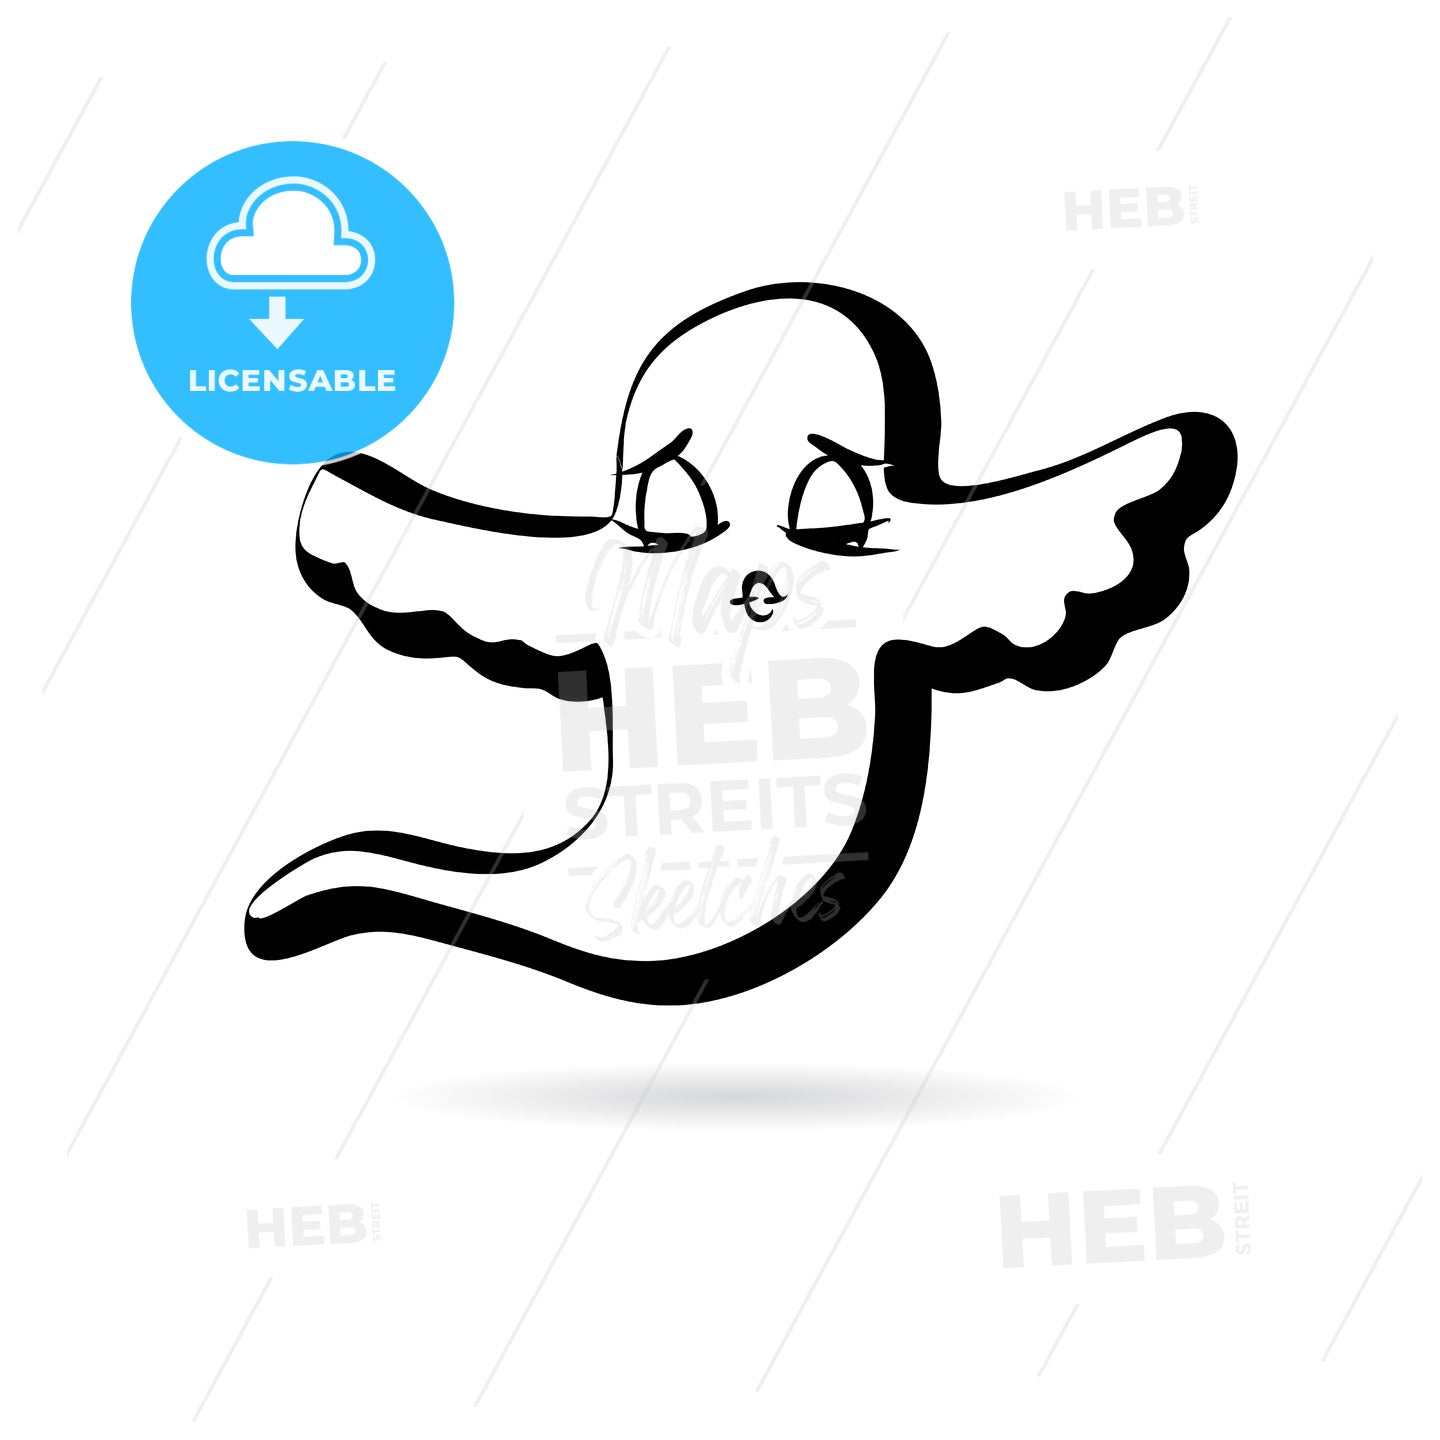 Flying ghost design vector sketch – instant download